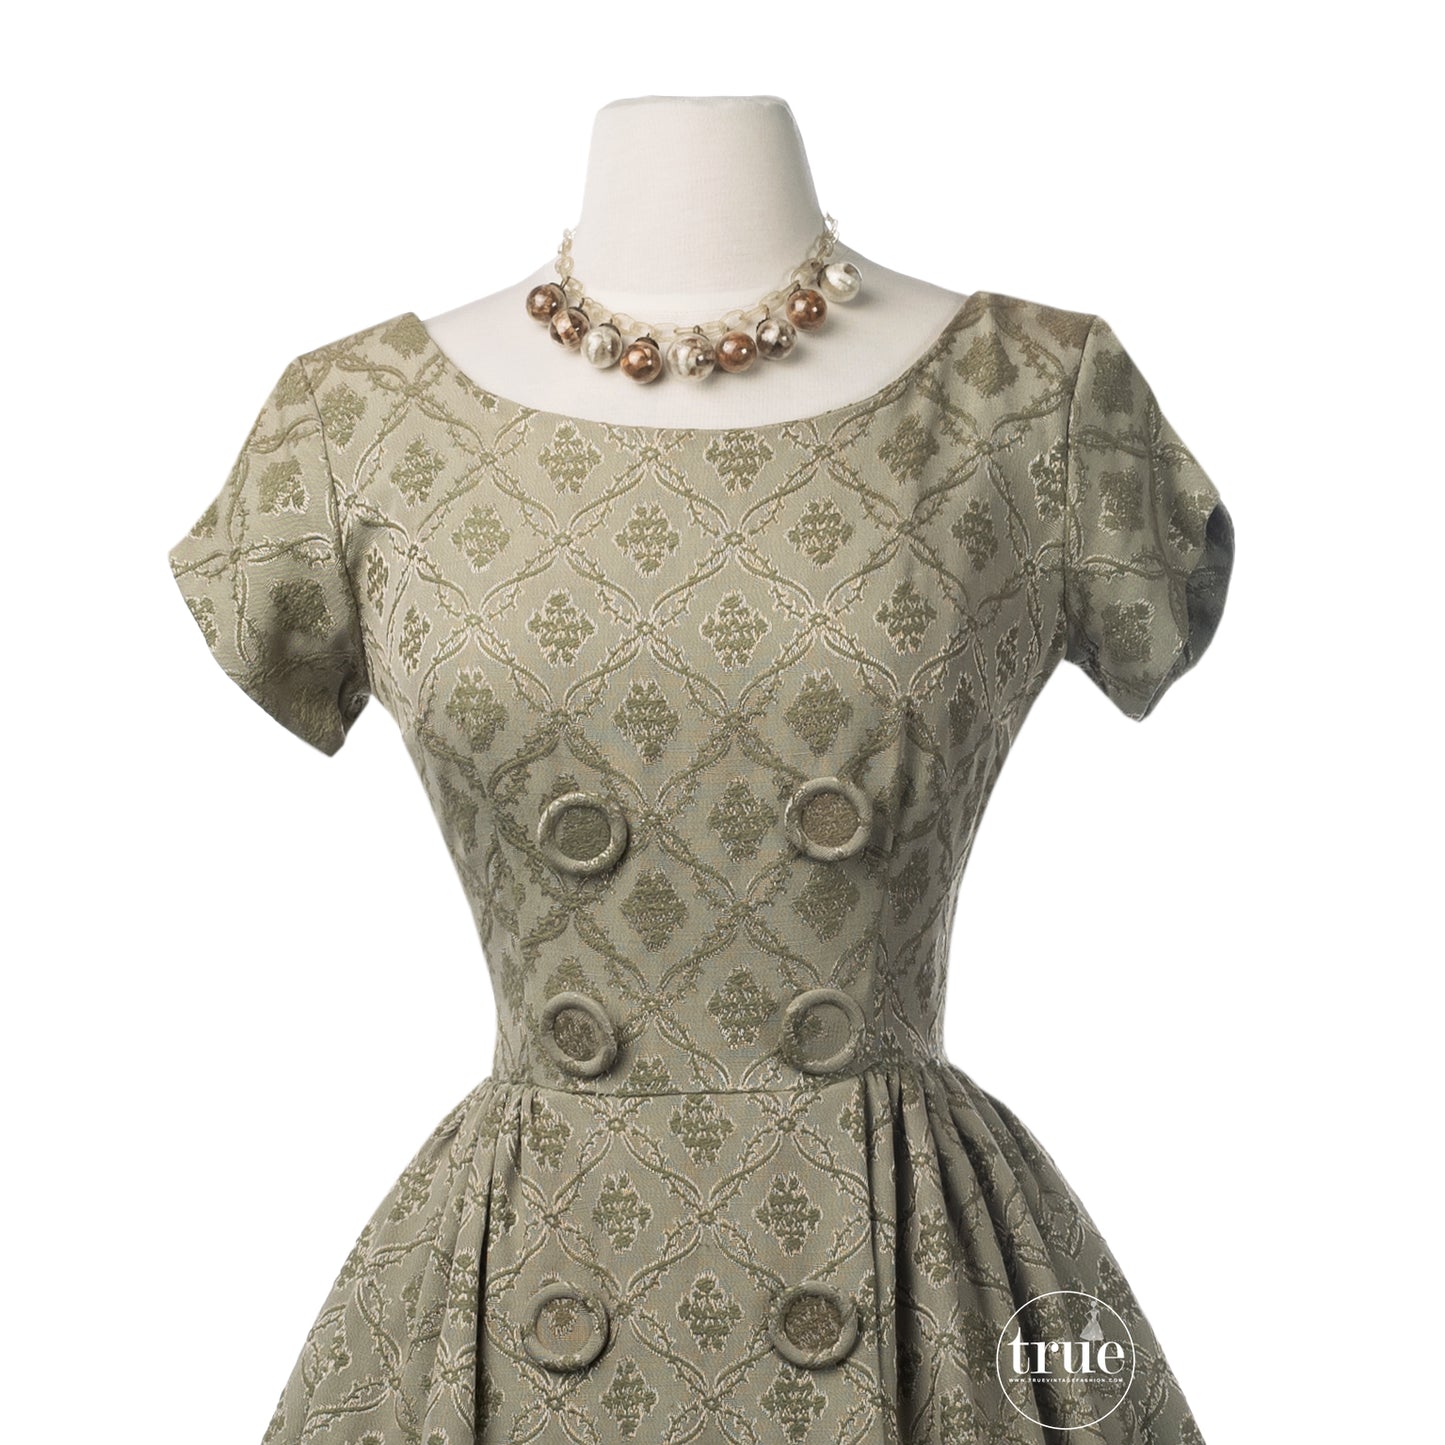 vintage 1950's dress ...pretty sage floral jacquard full skirt dress